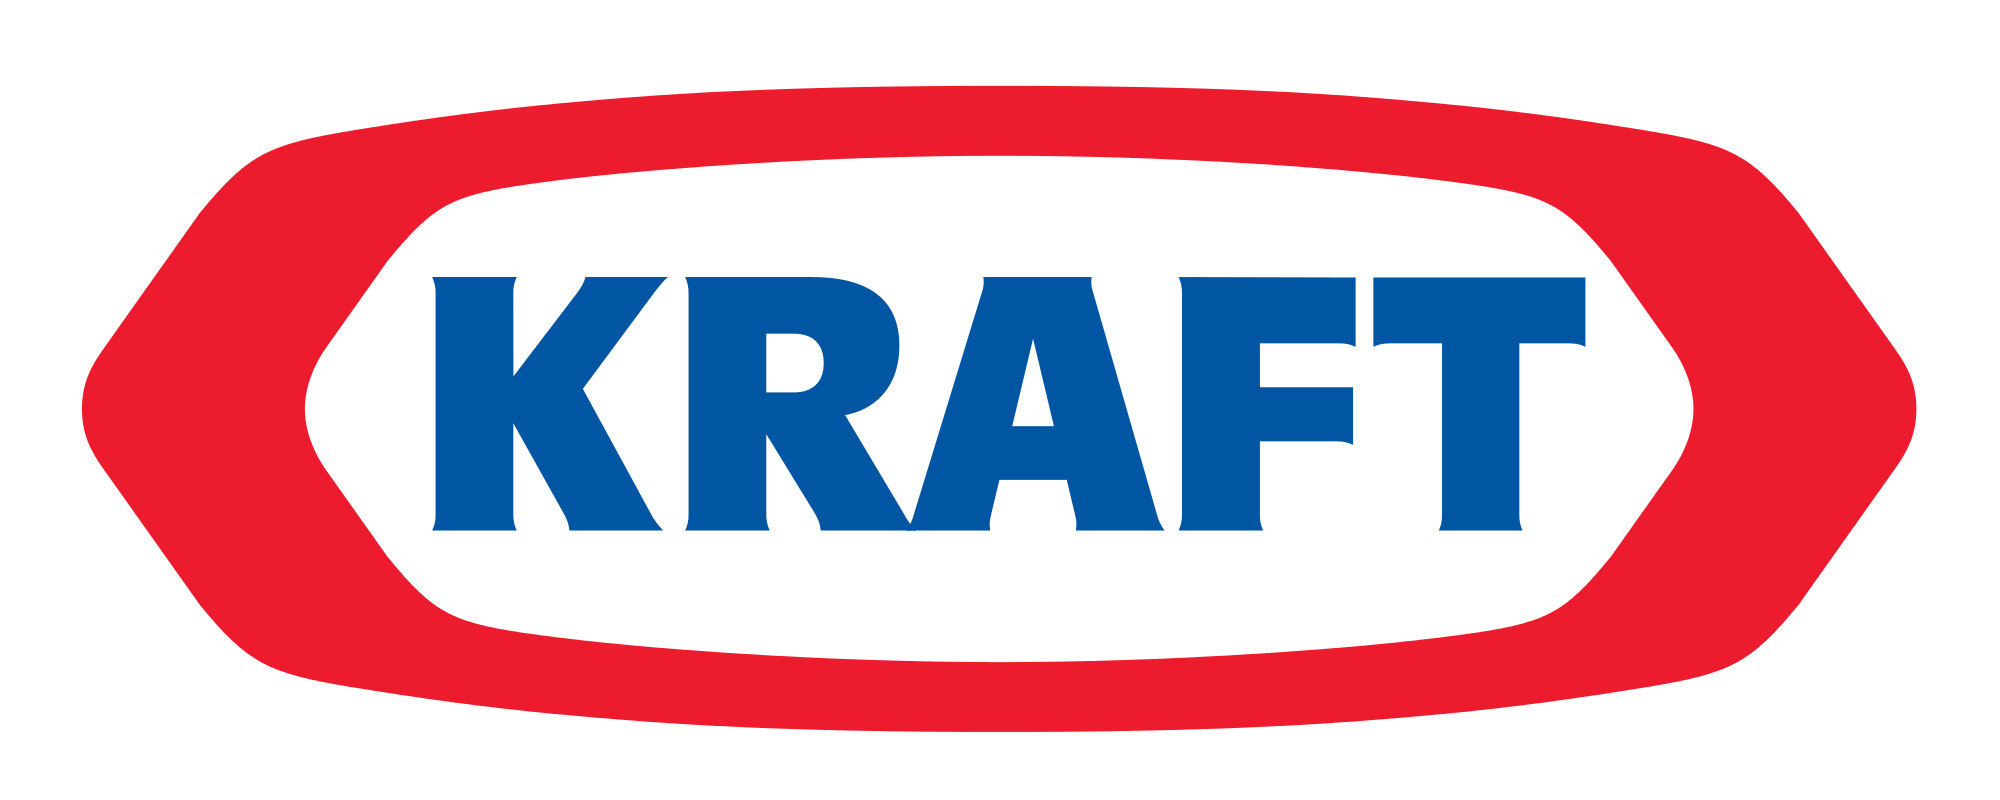 Kraft Logo icons